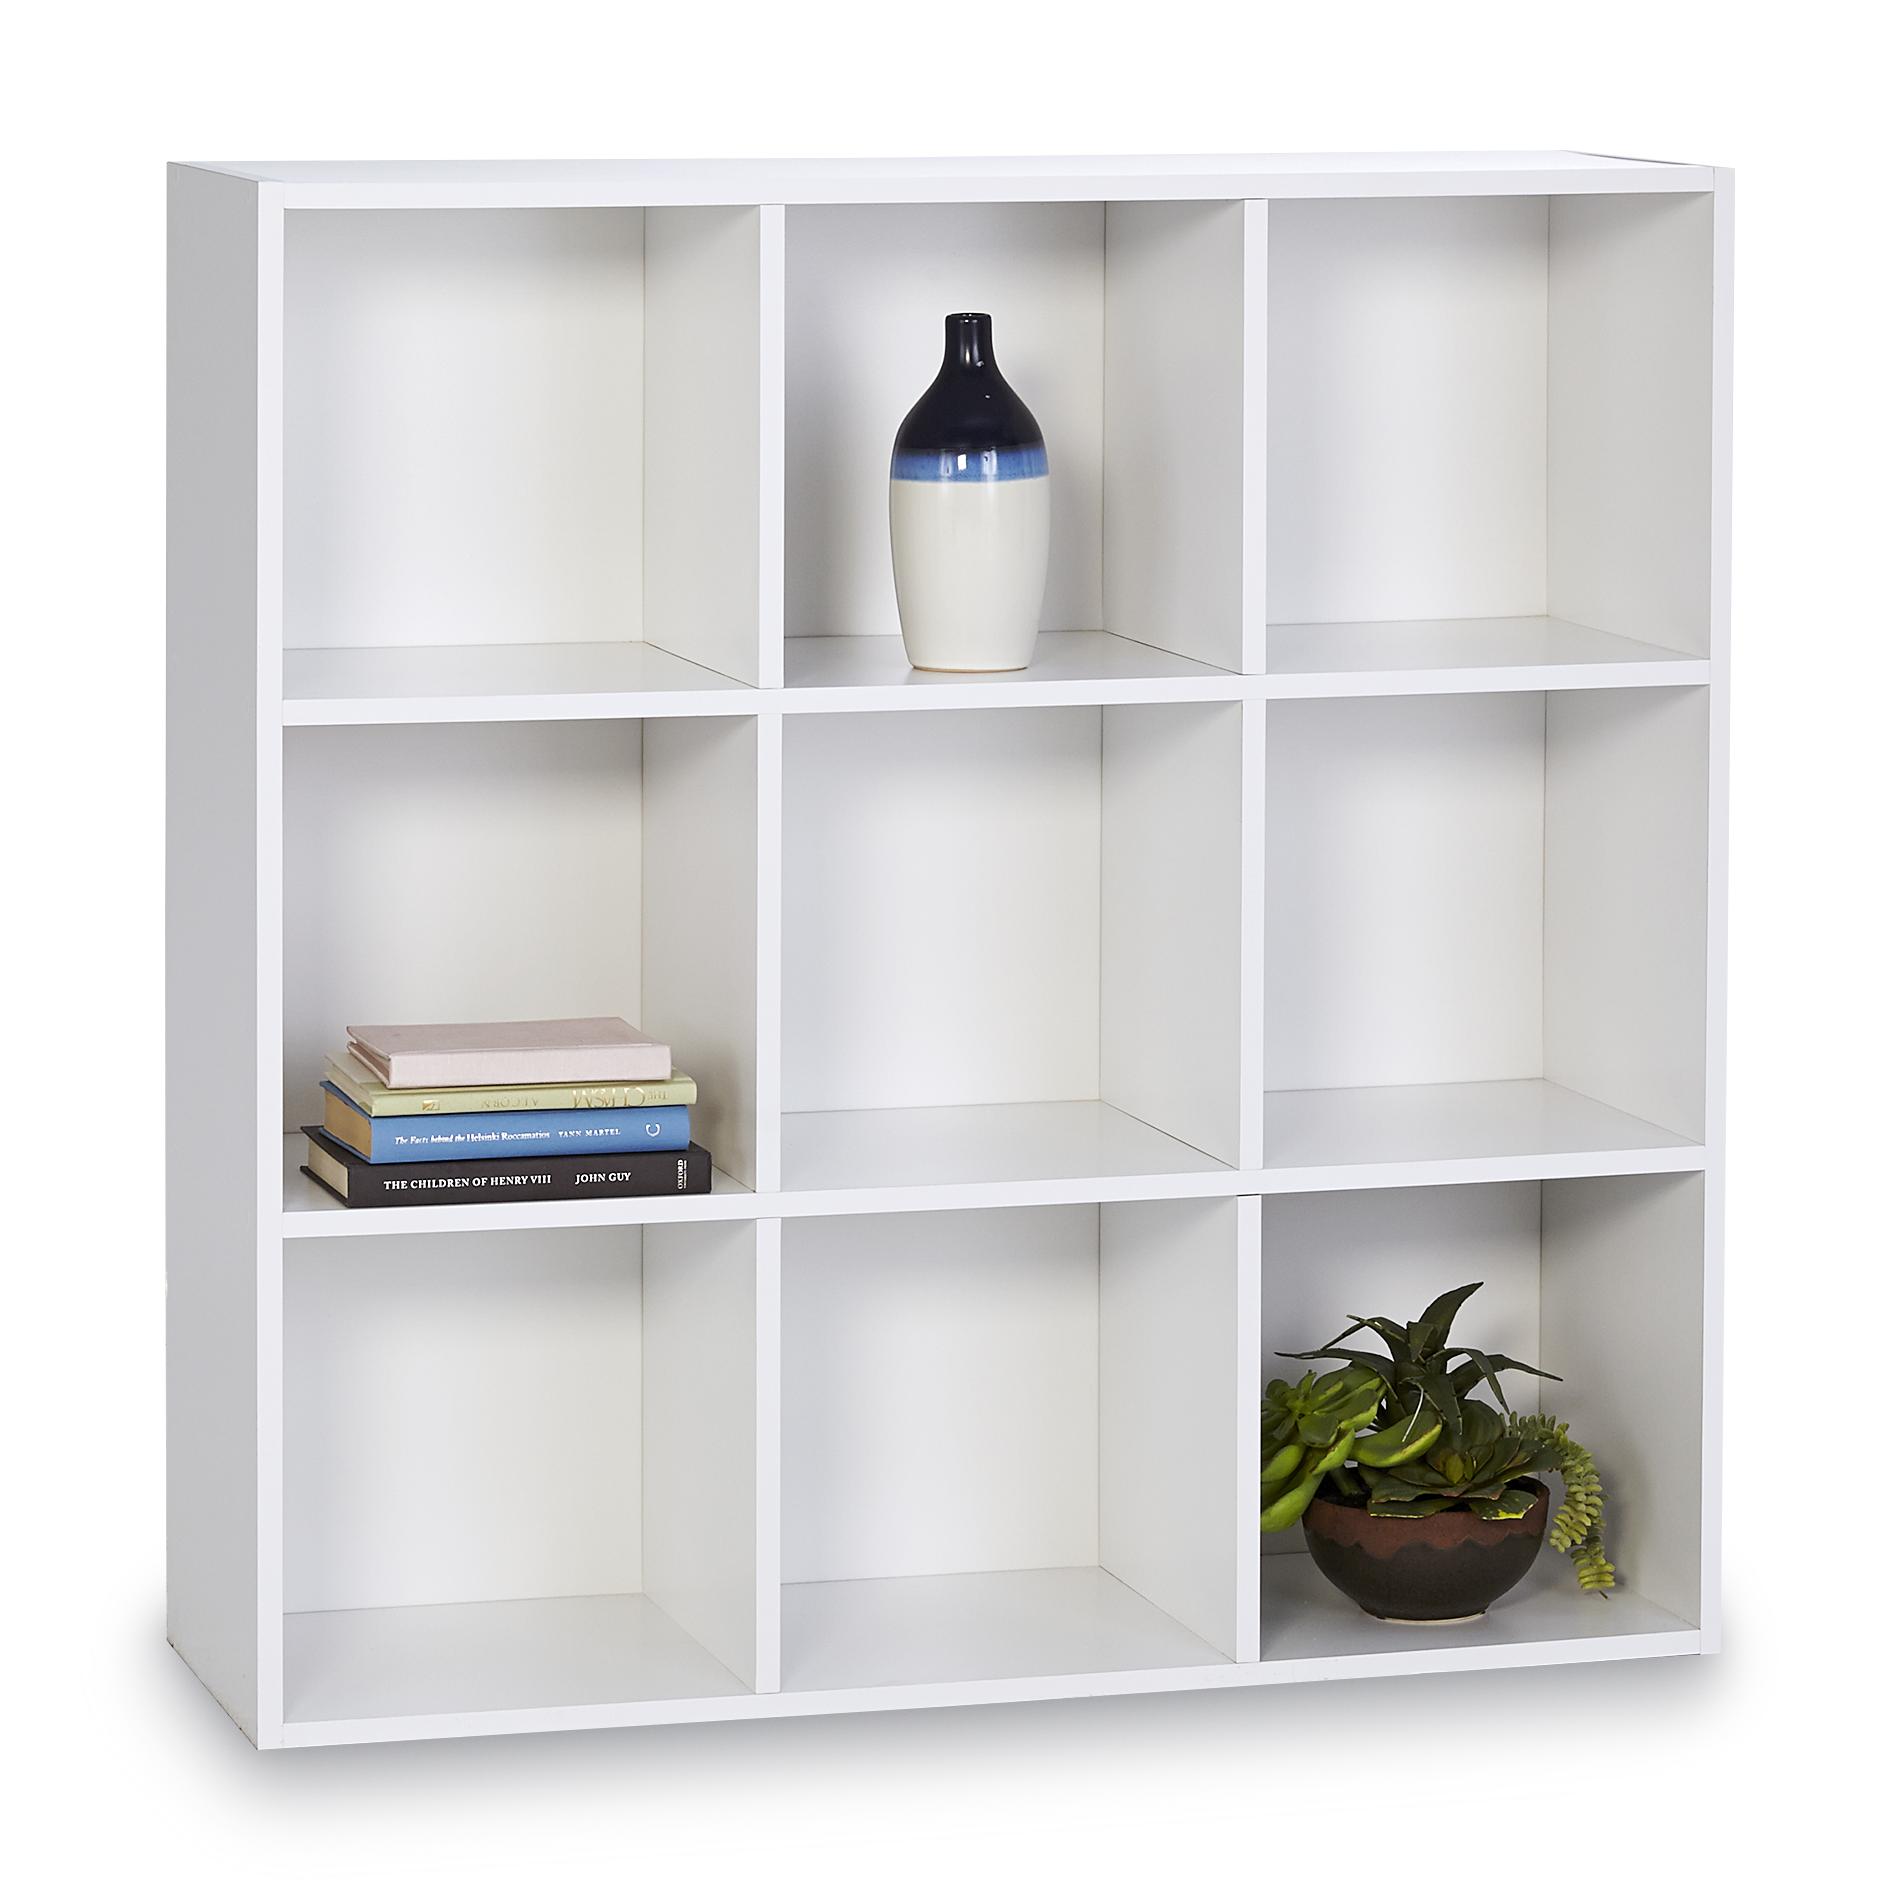 Essential Home 9 Cube Storage Unit, Kmart Storage Box Shelves